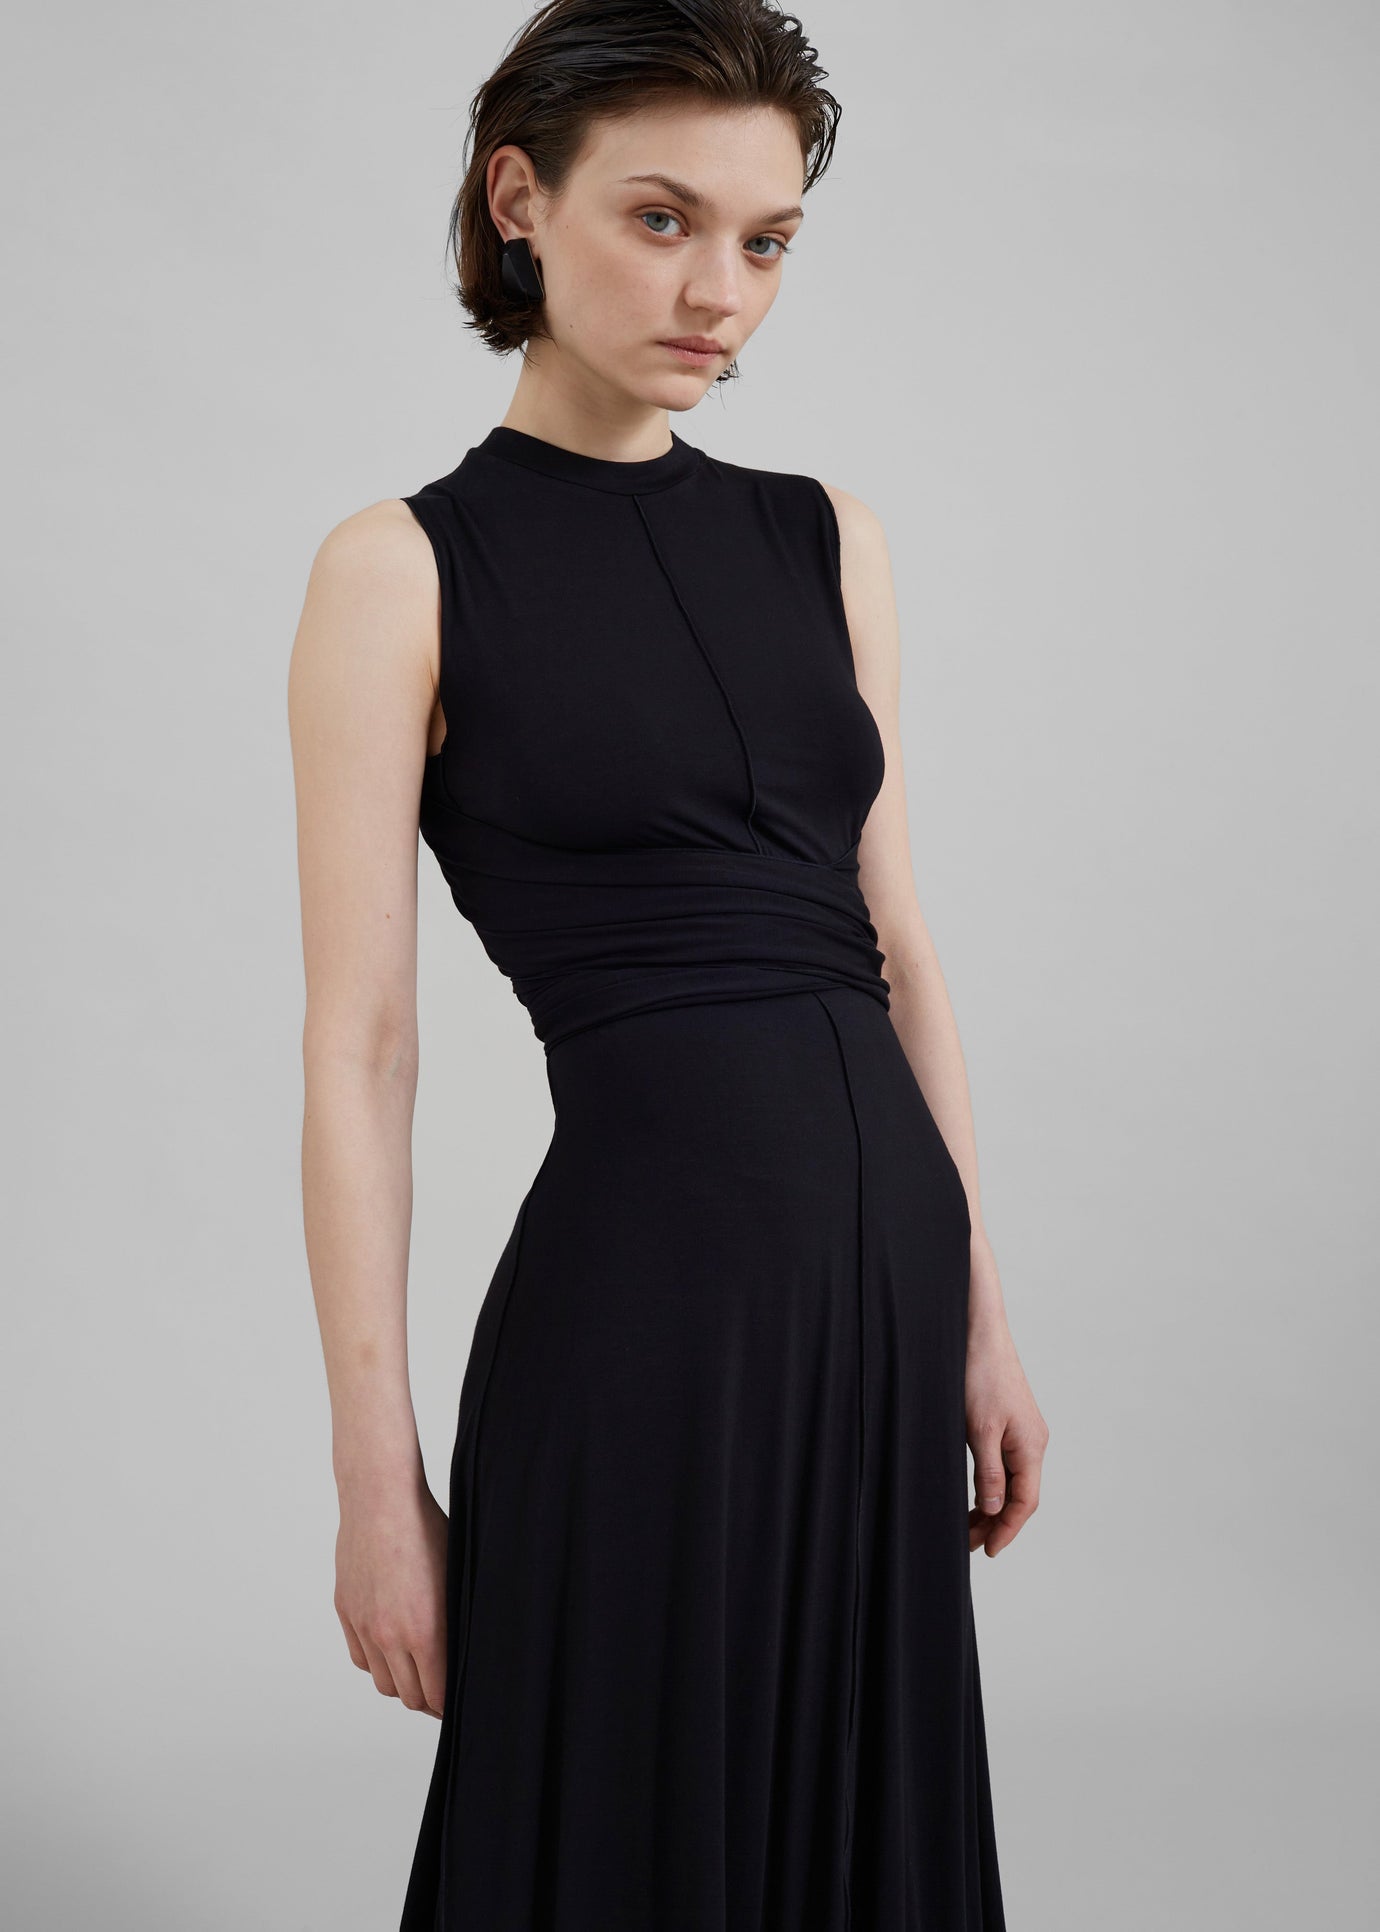 Proenza Schouler White Label Beatrice Dress - Black - 1